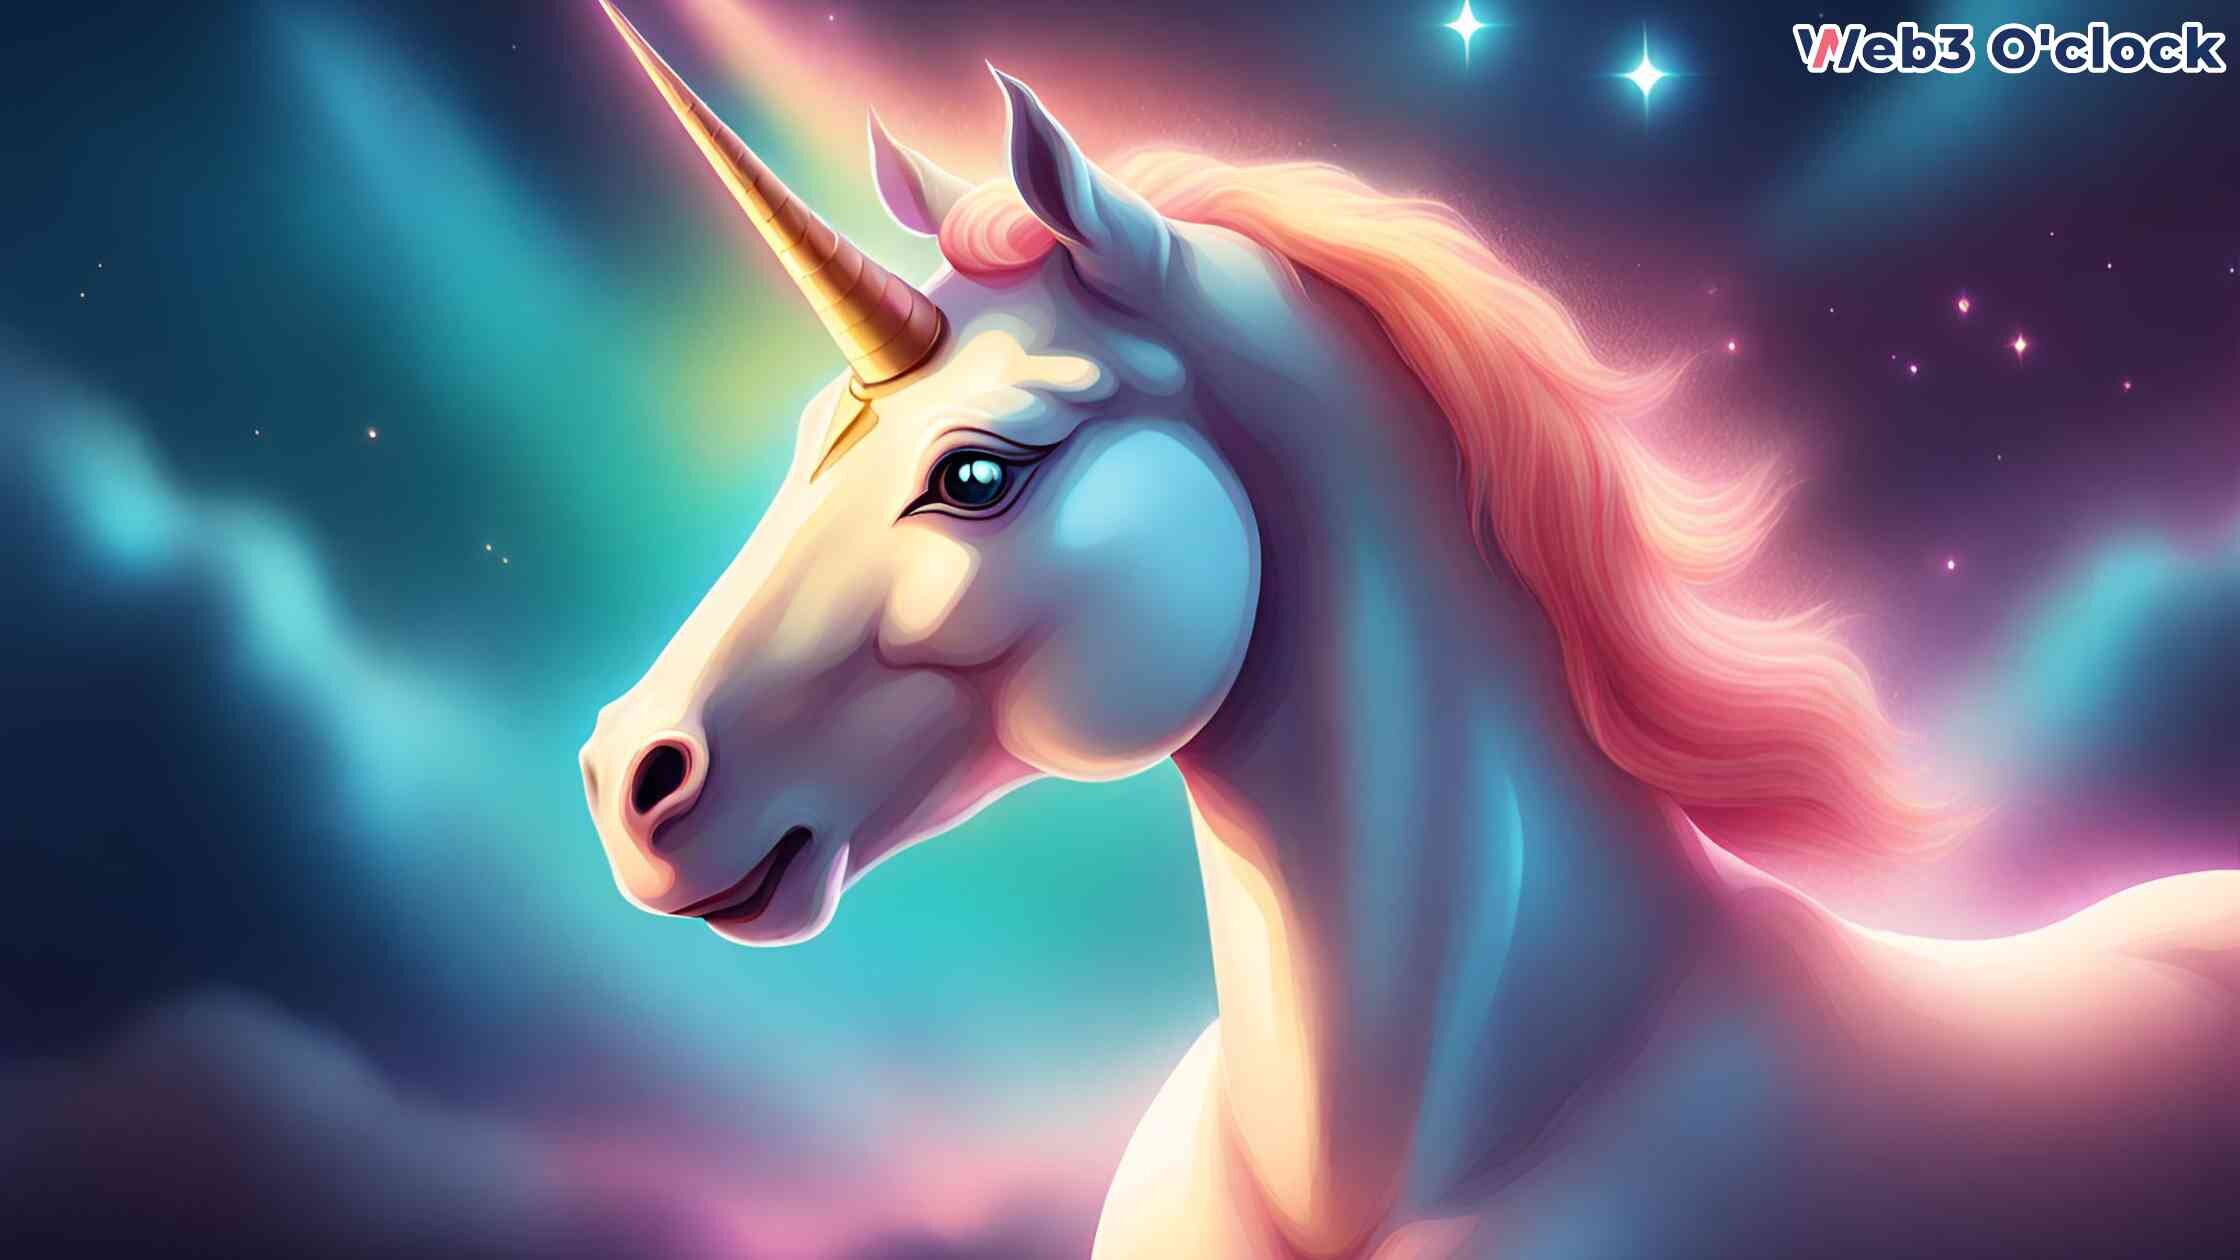 ElevenLabs Hits Unicorn Status by web3o'clock